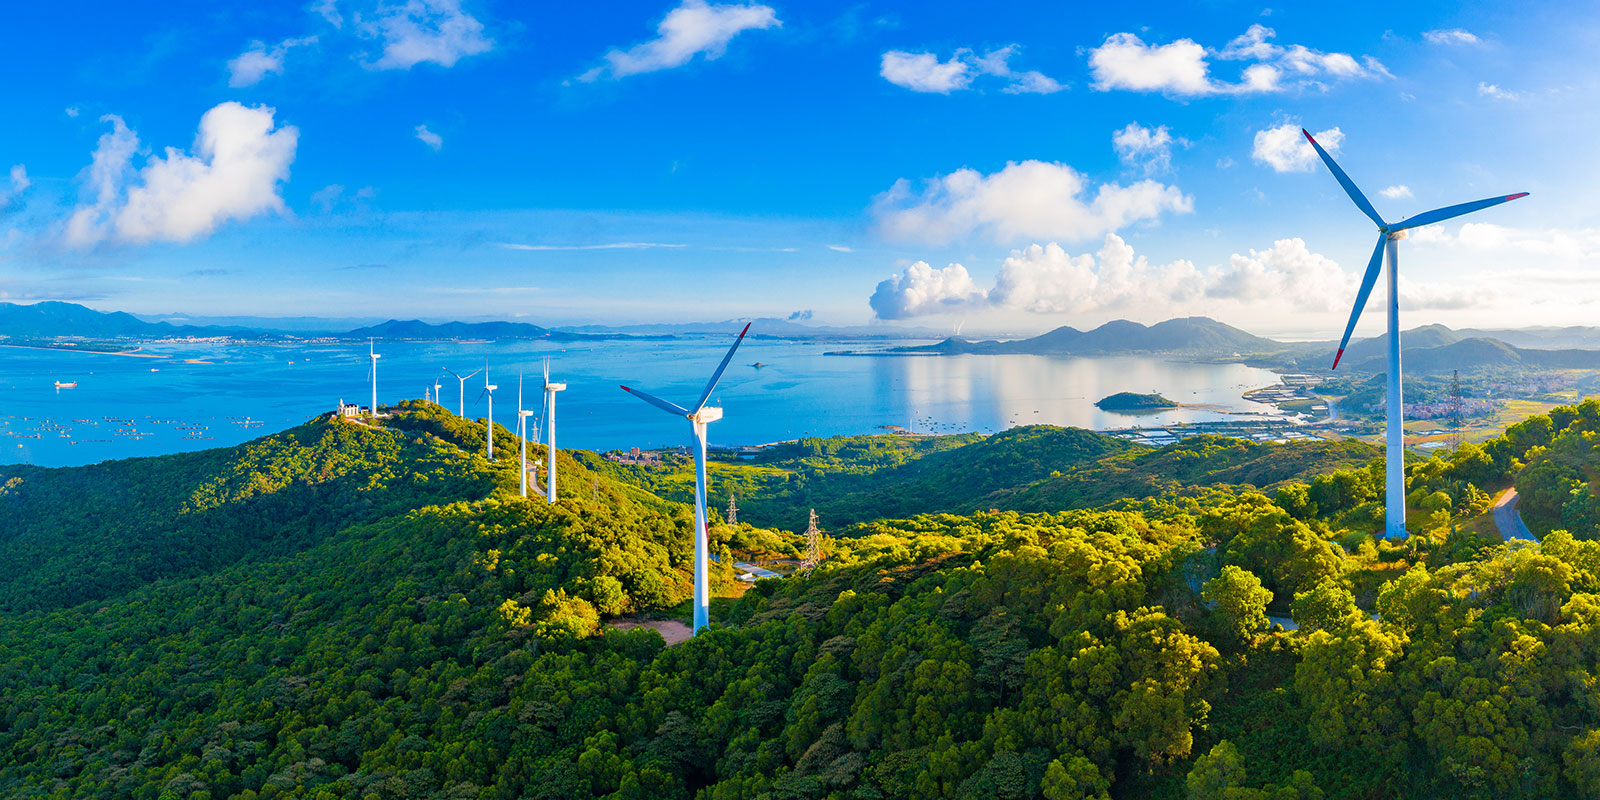 Big windmill in Hailing Island, Yangjiang City, Guangdong Province, China